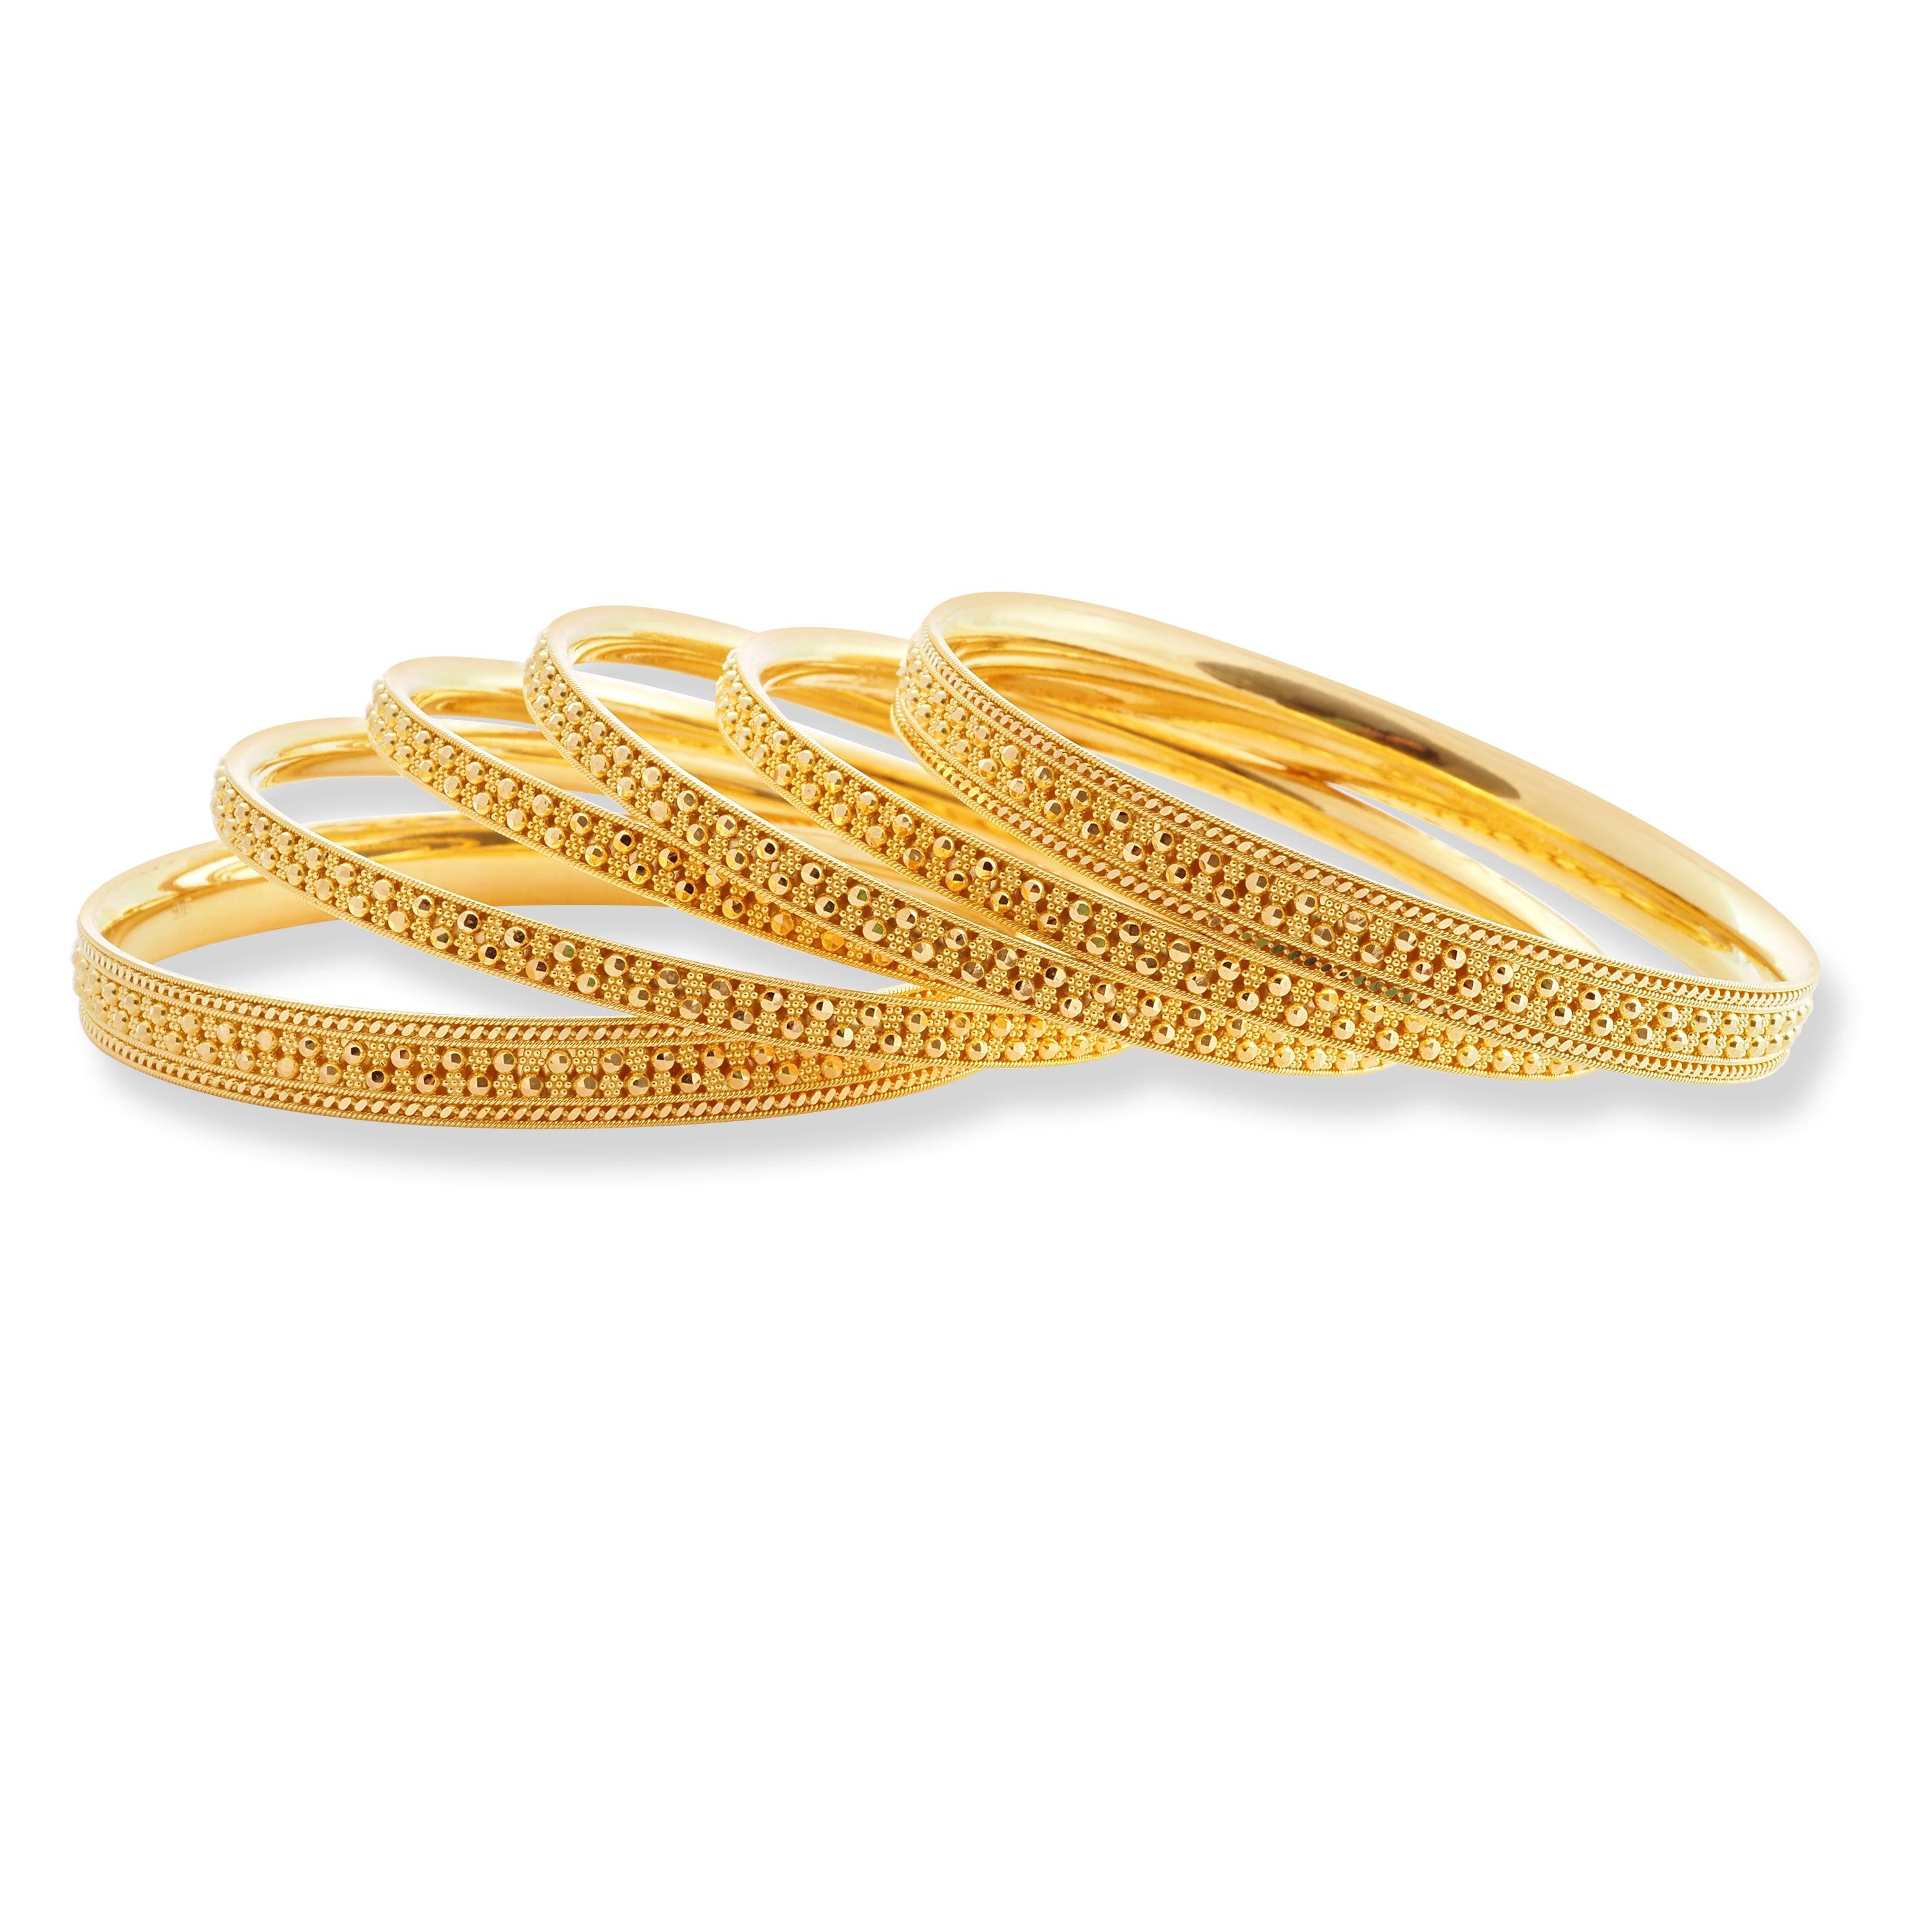 Set of Six 22ct Gold Bangles with Diamond Cut Design and Filigree Work B-8577 - Minar Jewellers